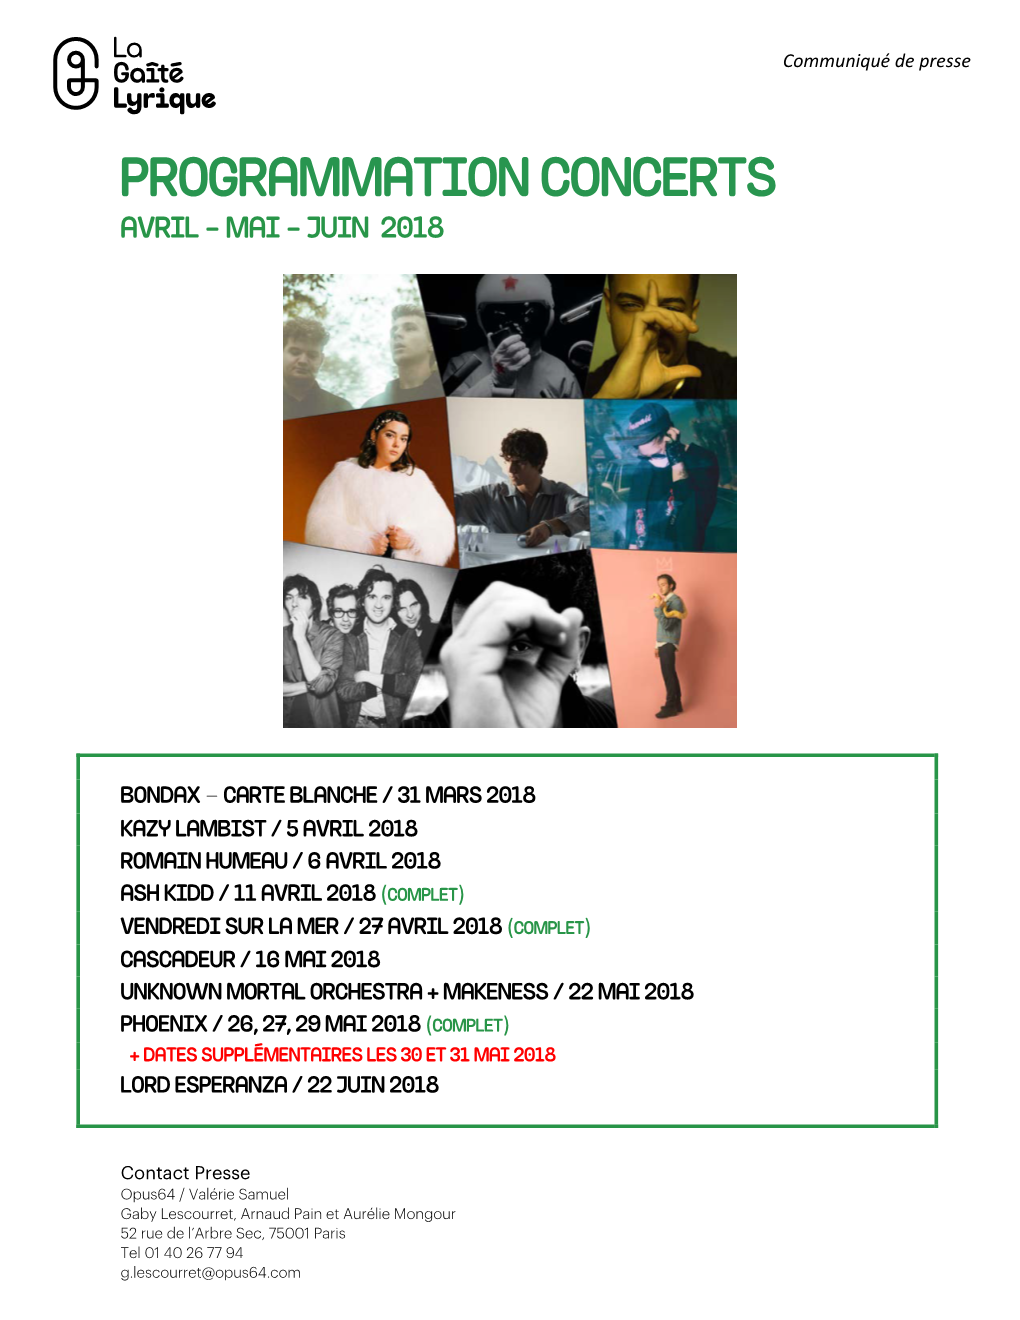 Programmation Concerts Avril - Mai - Juin 2018